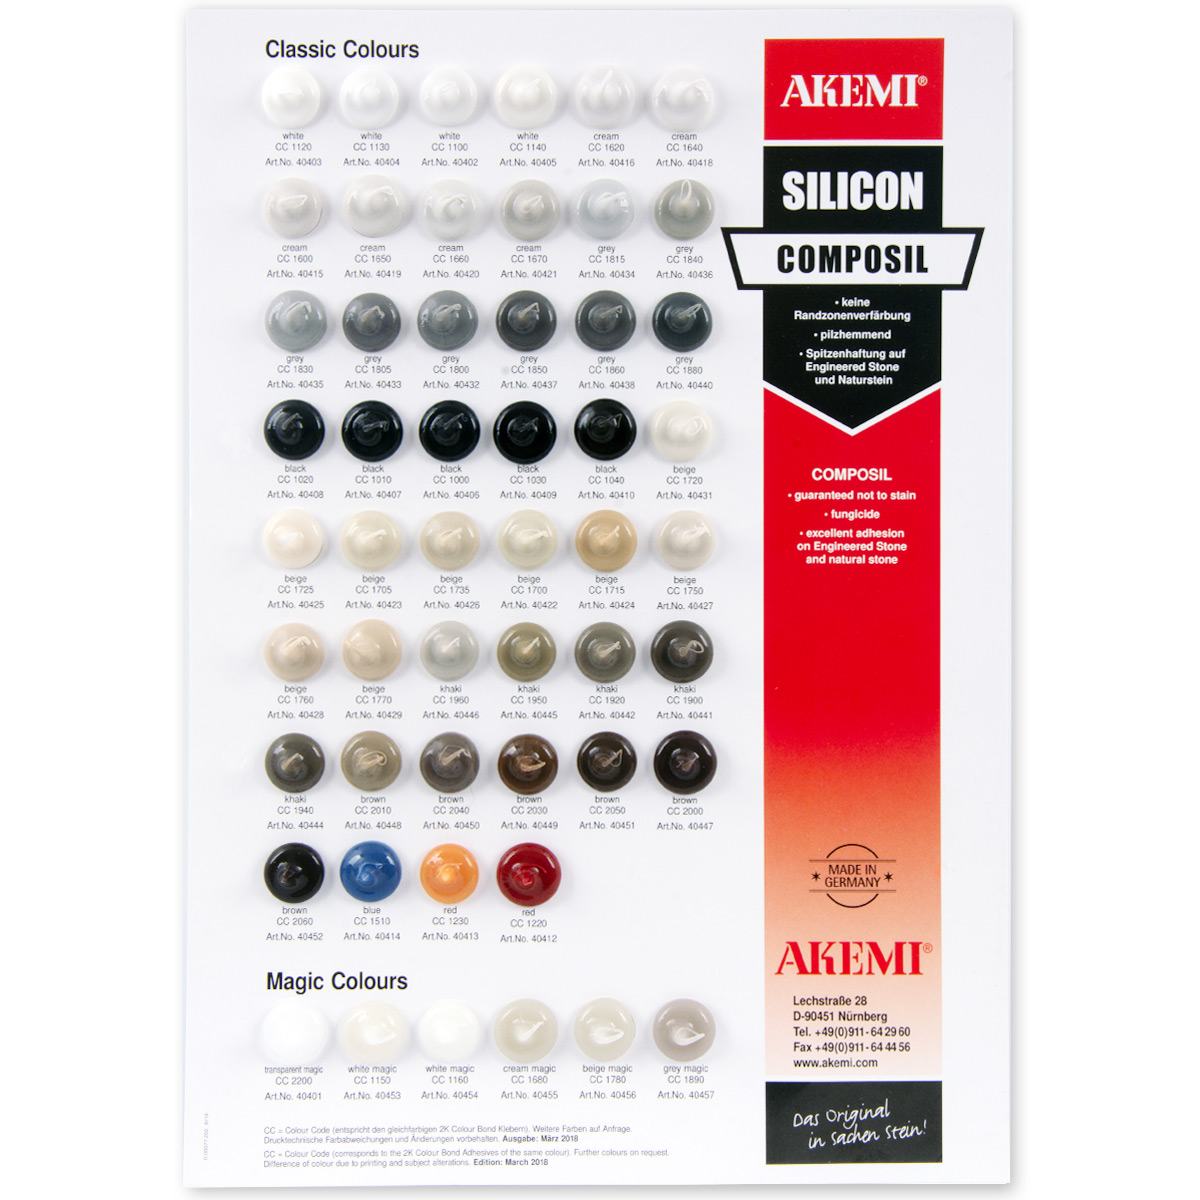 Composil - Colour Matched Silicone: AKEMI Stone